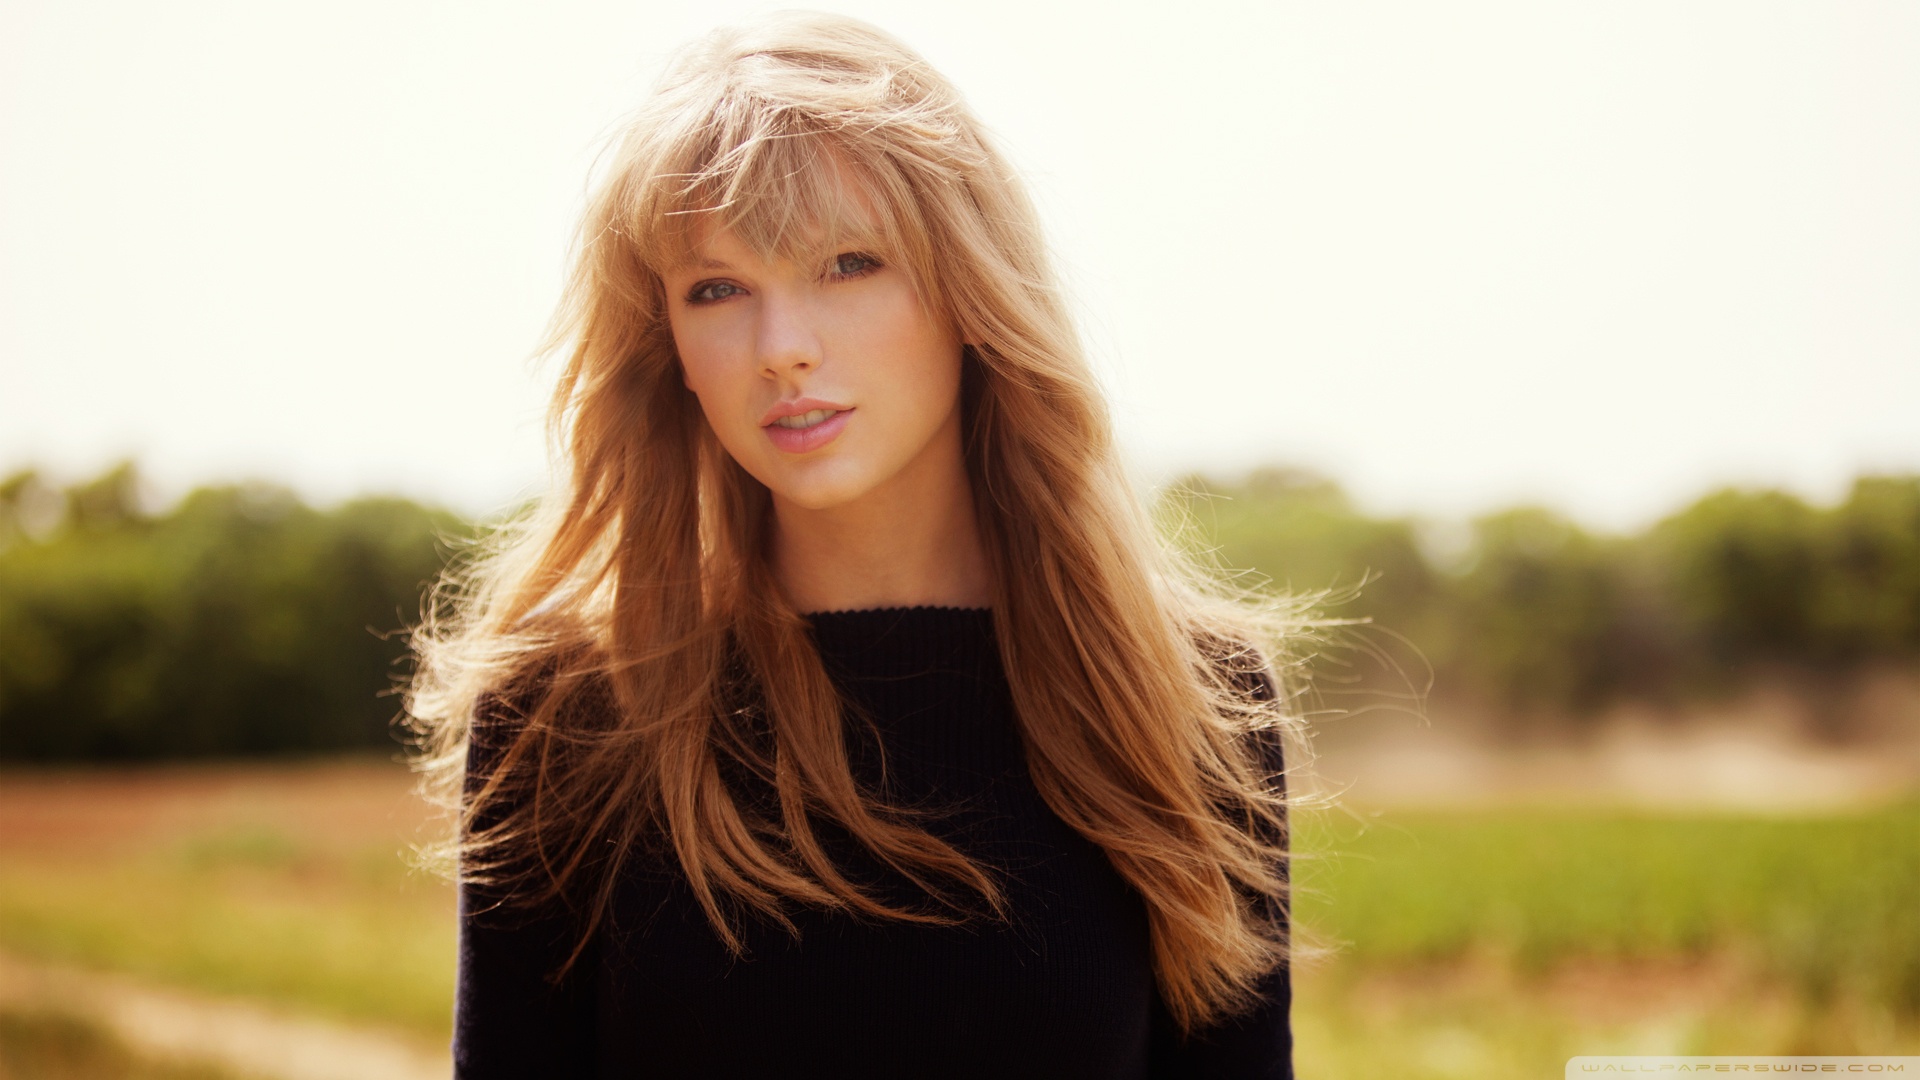 Taylor Swift Wallpaper HD 1080p - Wallpapers